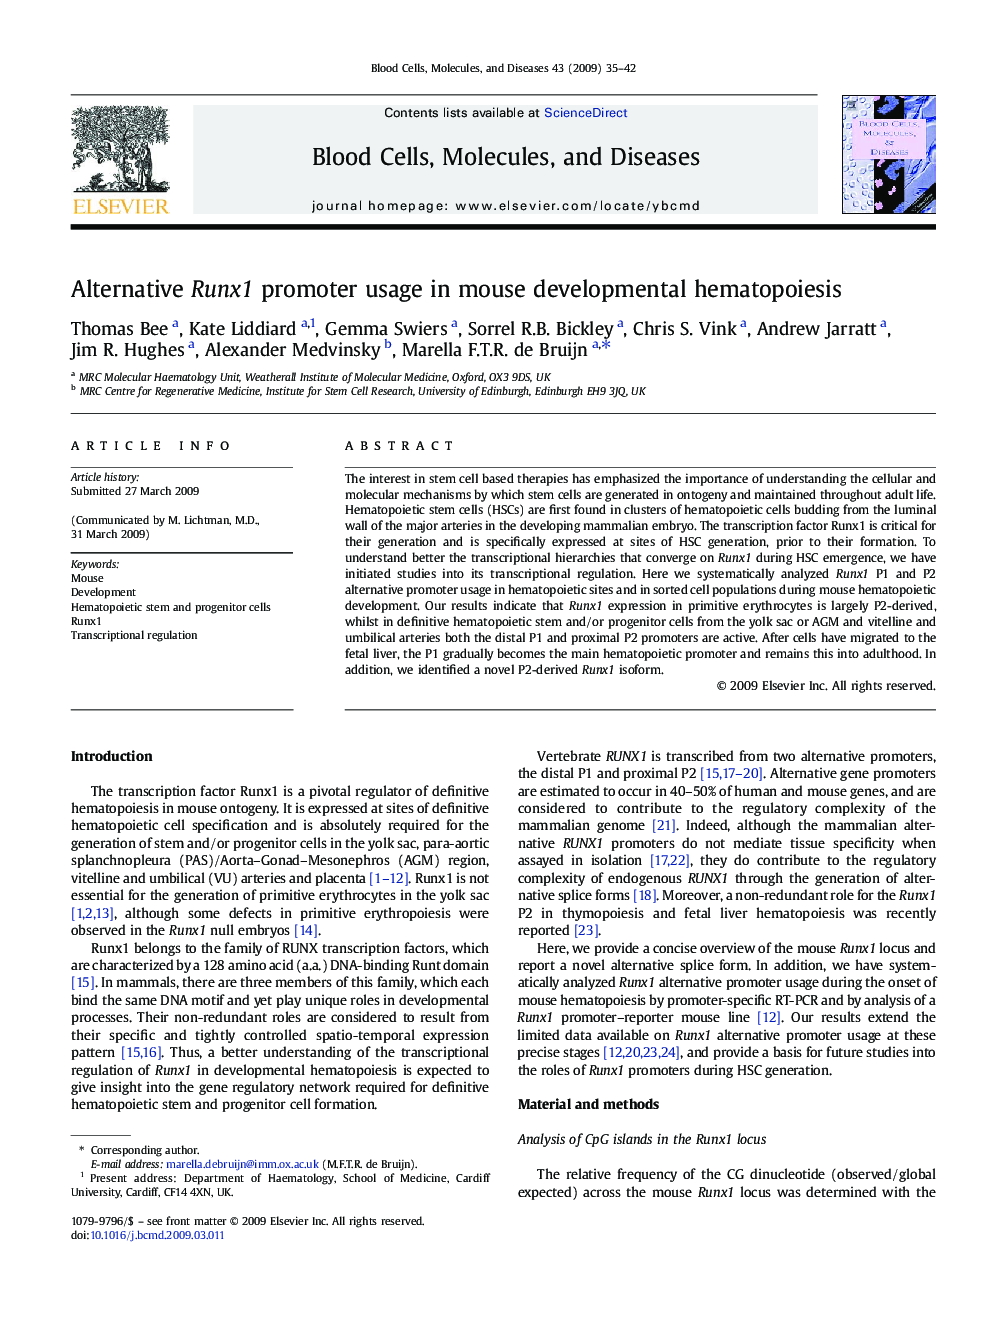 Alternative Runx1 promoter usage in mouse developmental hematopoiesis